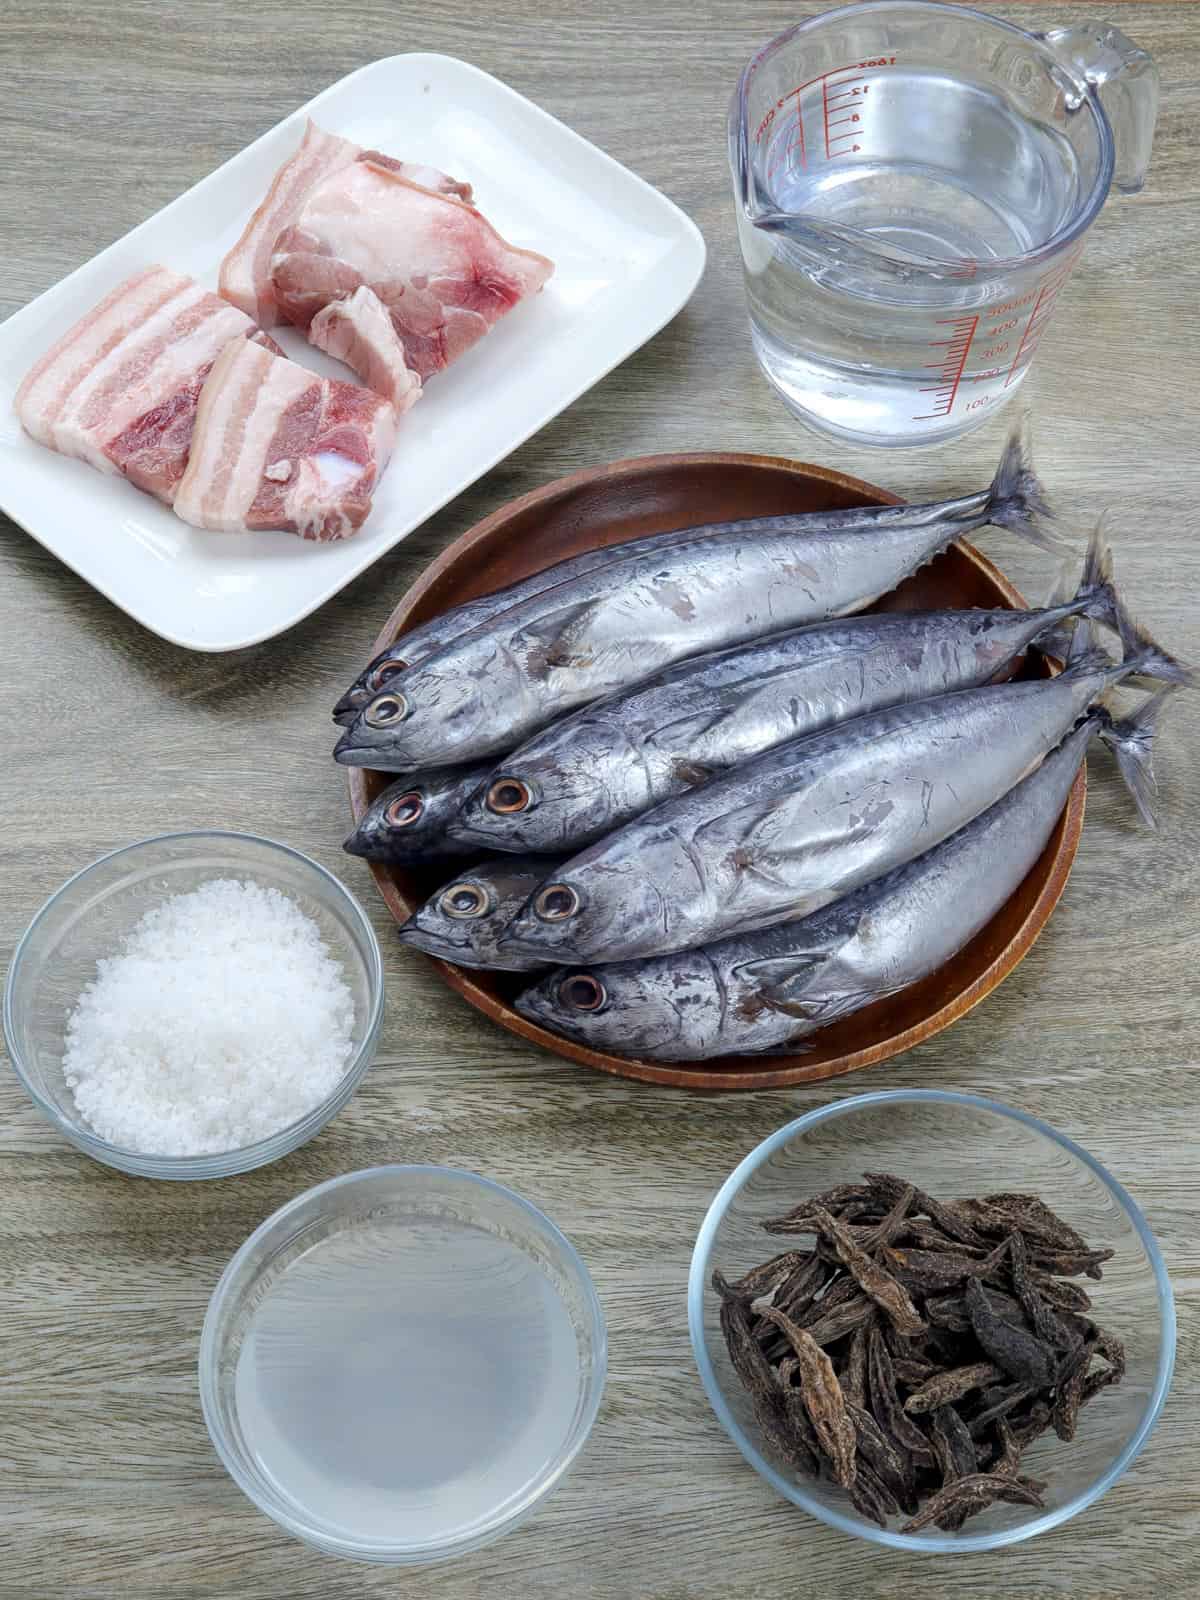 bullet tuna, pork belly, salt, dried kamias, vinegar